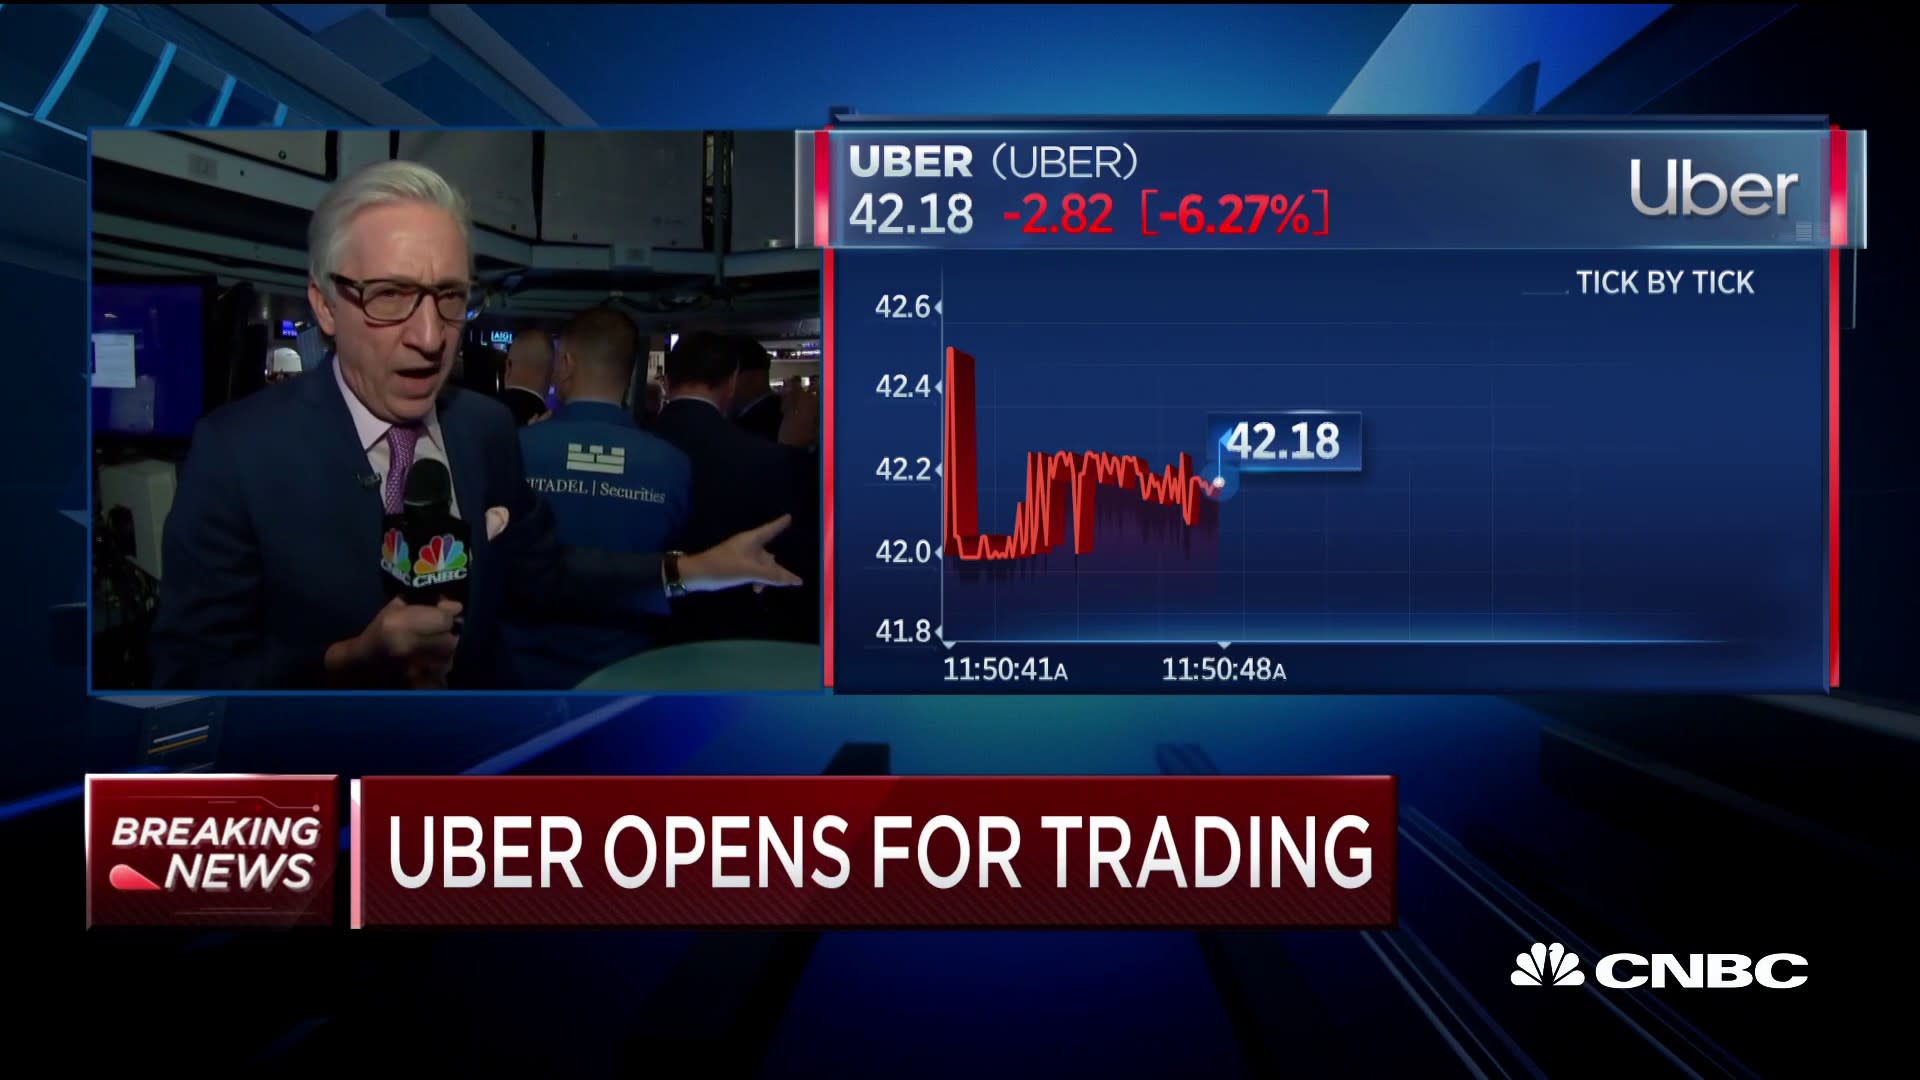 Uber begins trading at the NYSE below IPO price